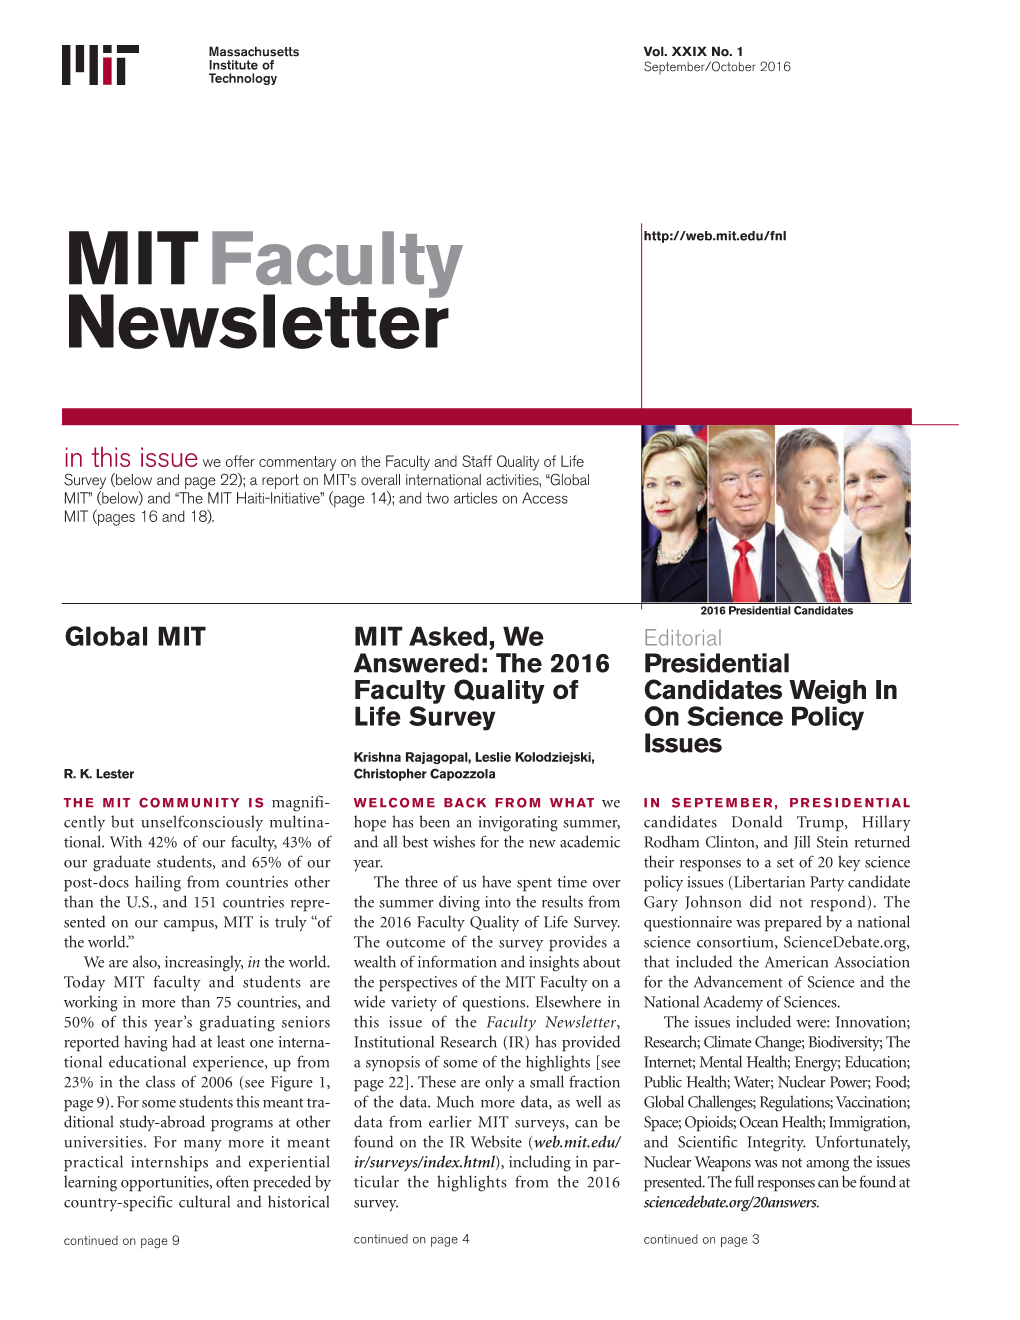 MIT Faculty Newsletter, Vol. XXIX No. 1, September/October 2016